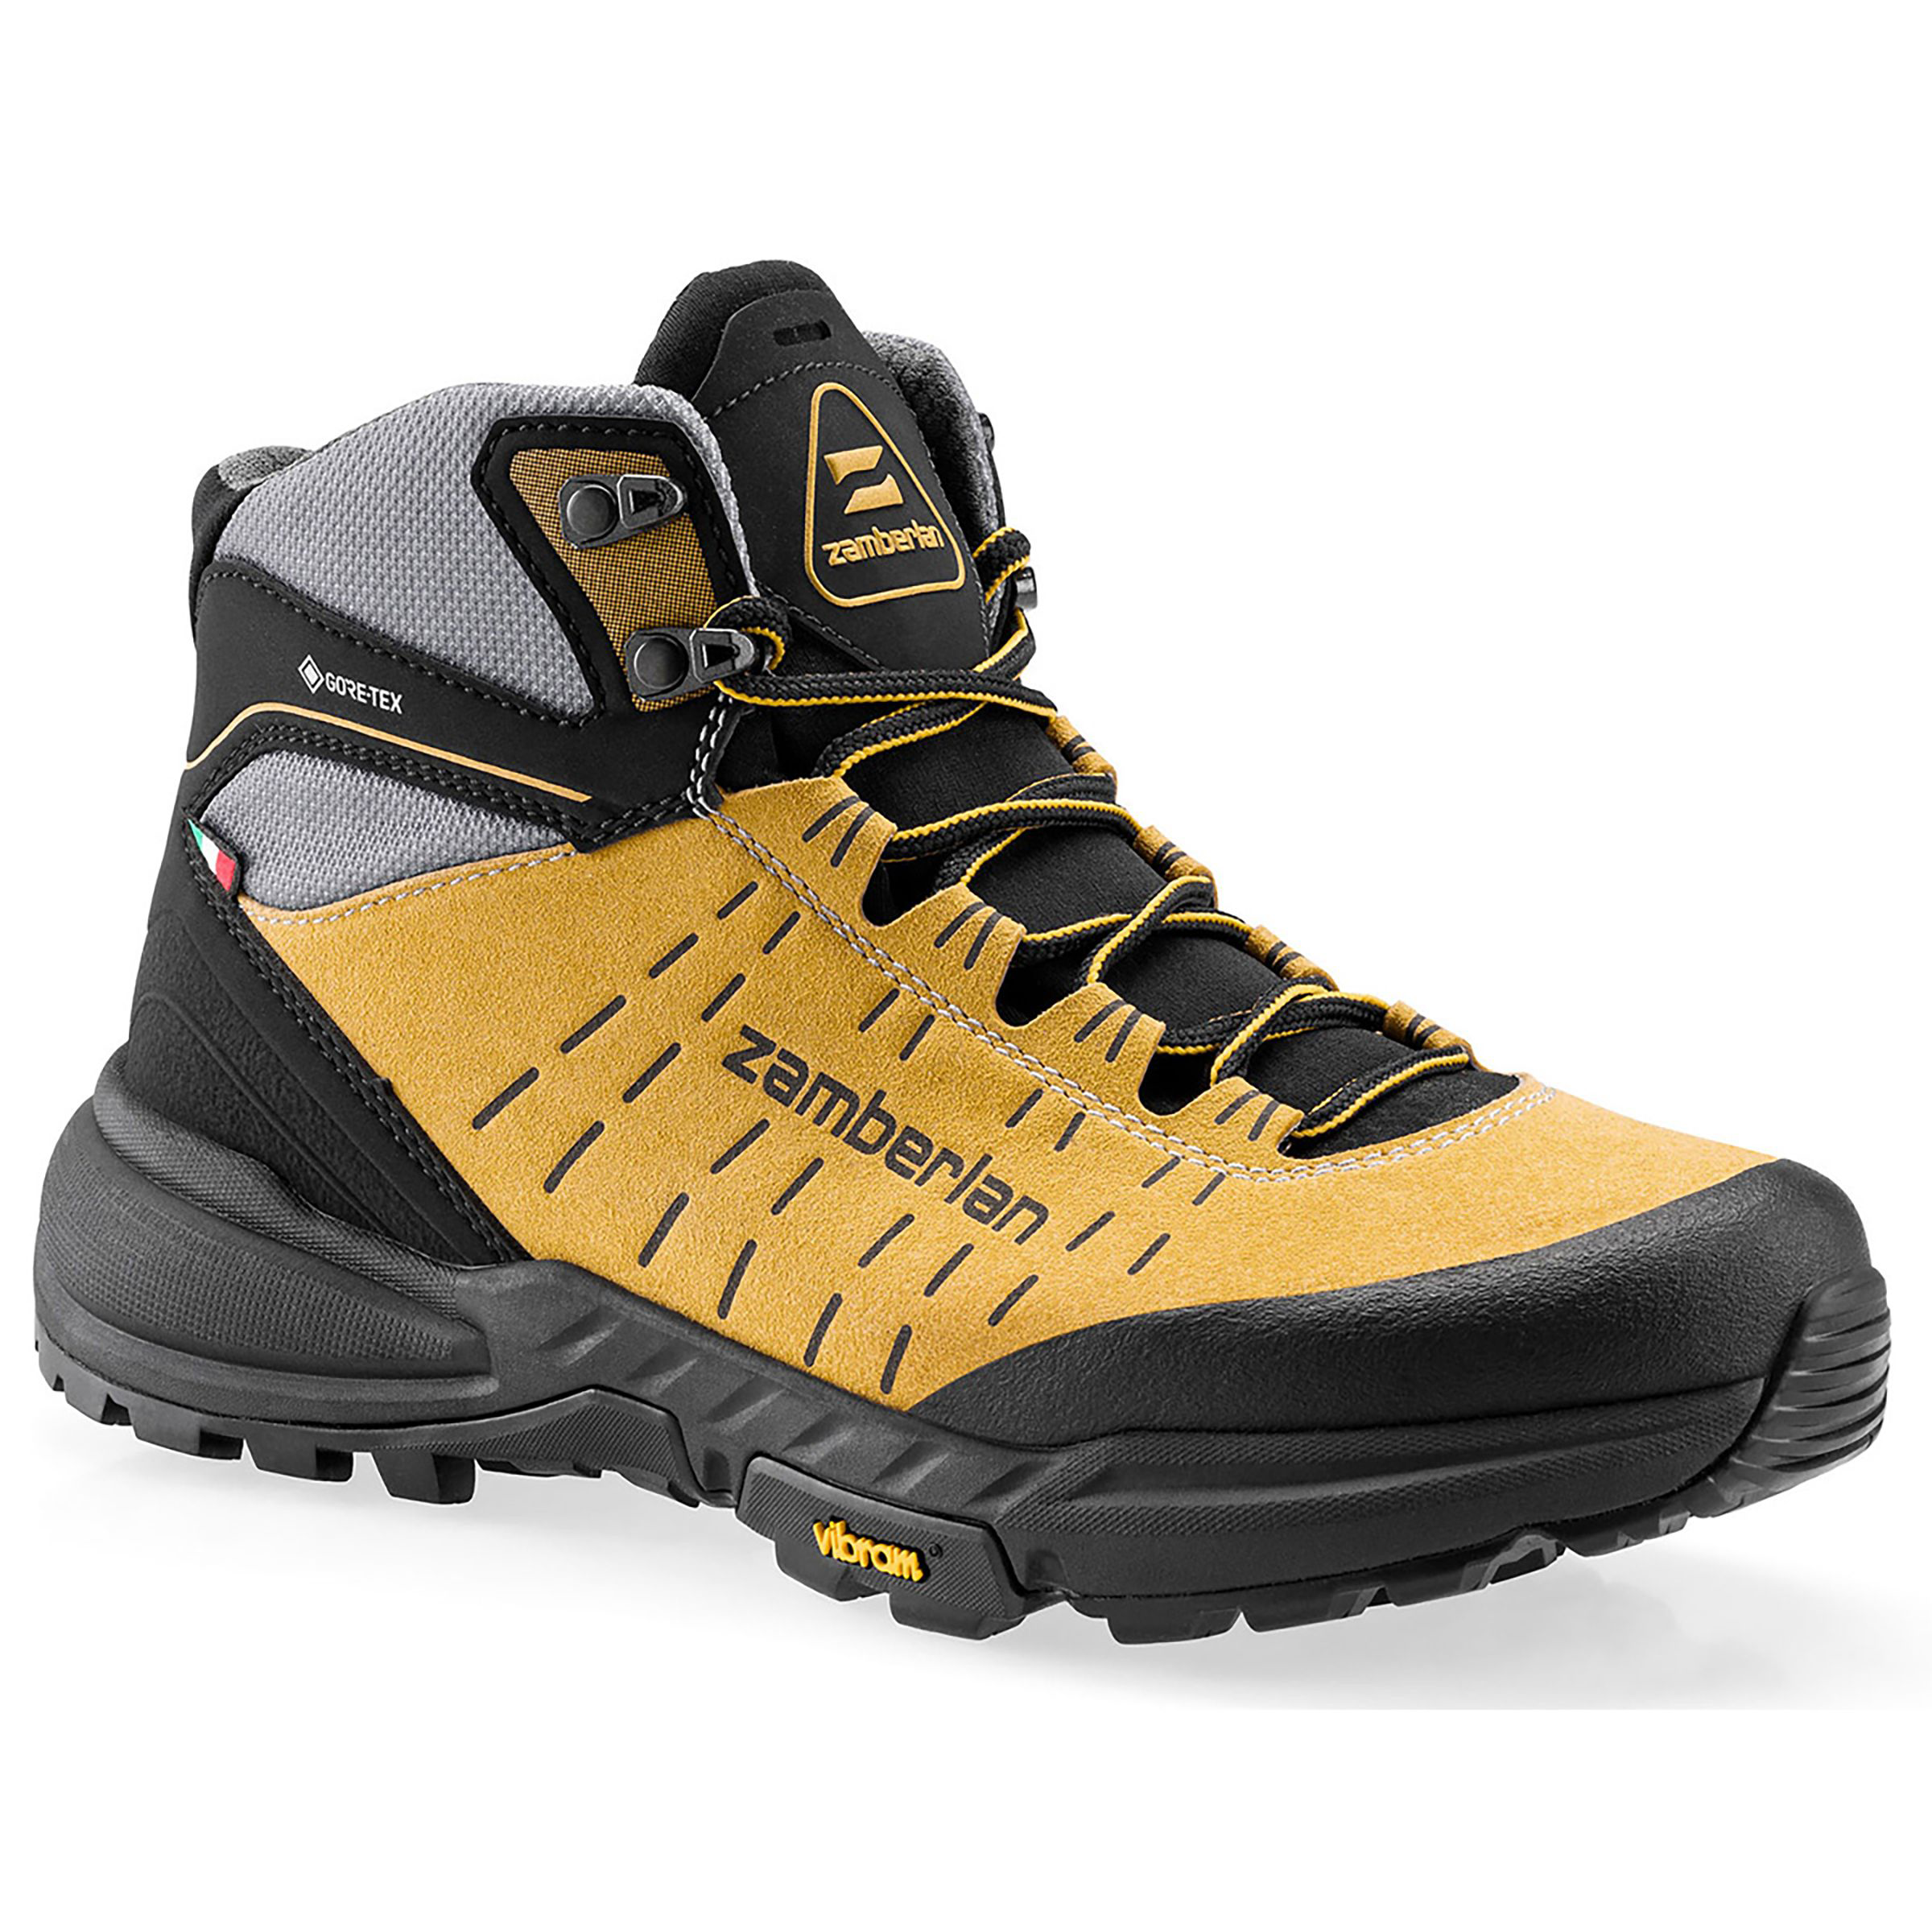 Zamberlan 334 Circe GTX Waterproof Hiking Boots for Ladies - Yellow - 8M